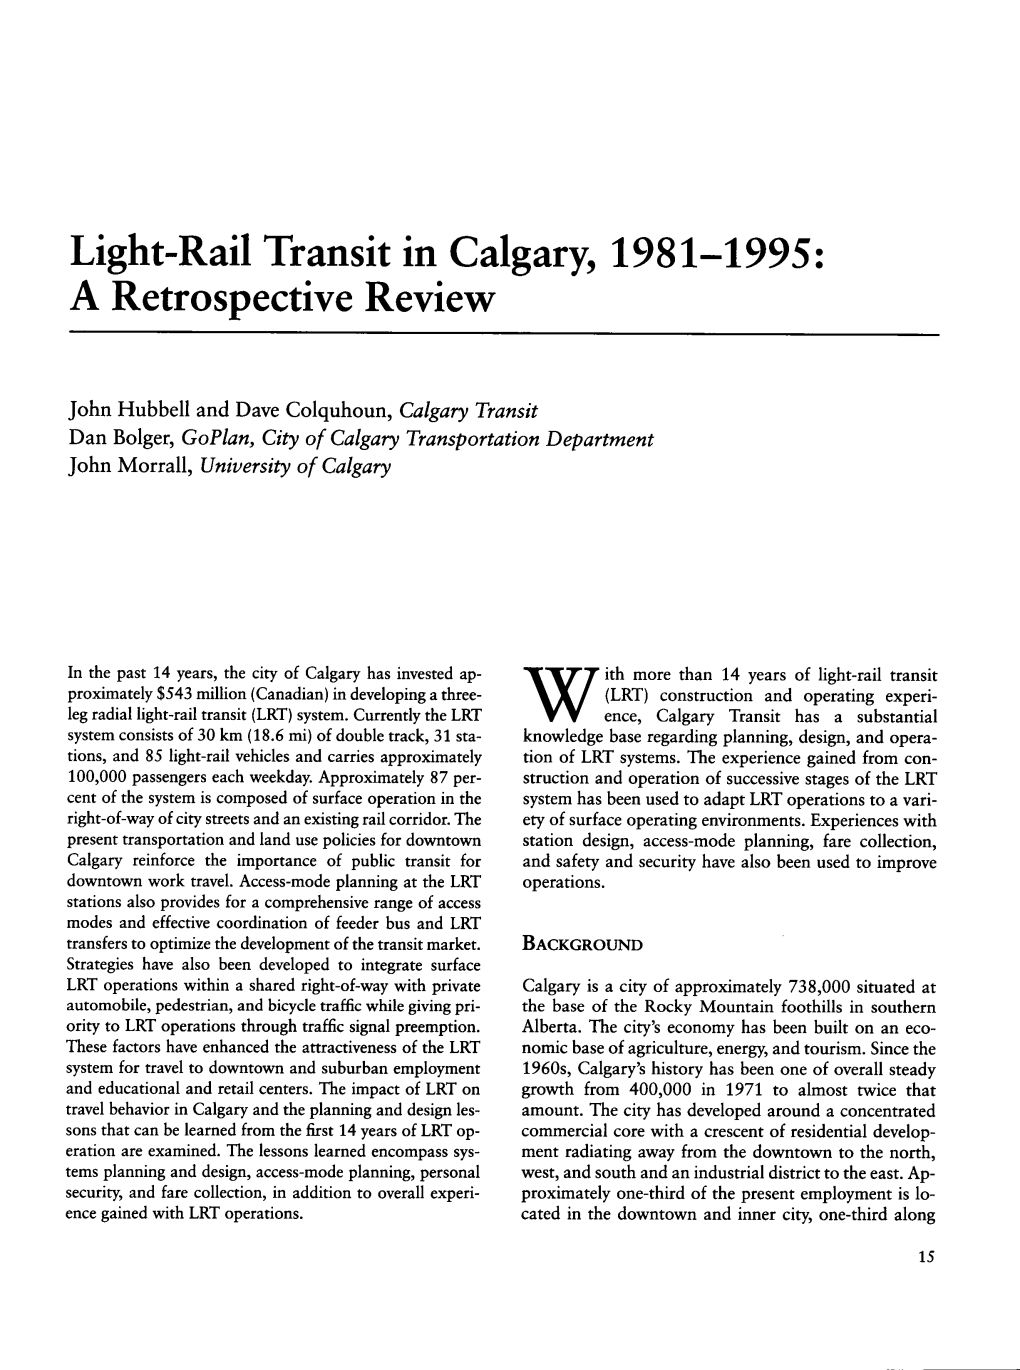 Light-Rail Transit in Calgary, 1981-1995: a Retrospective Review